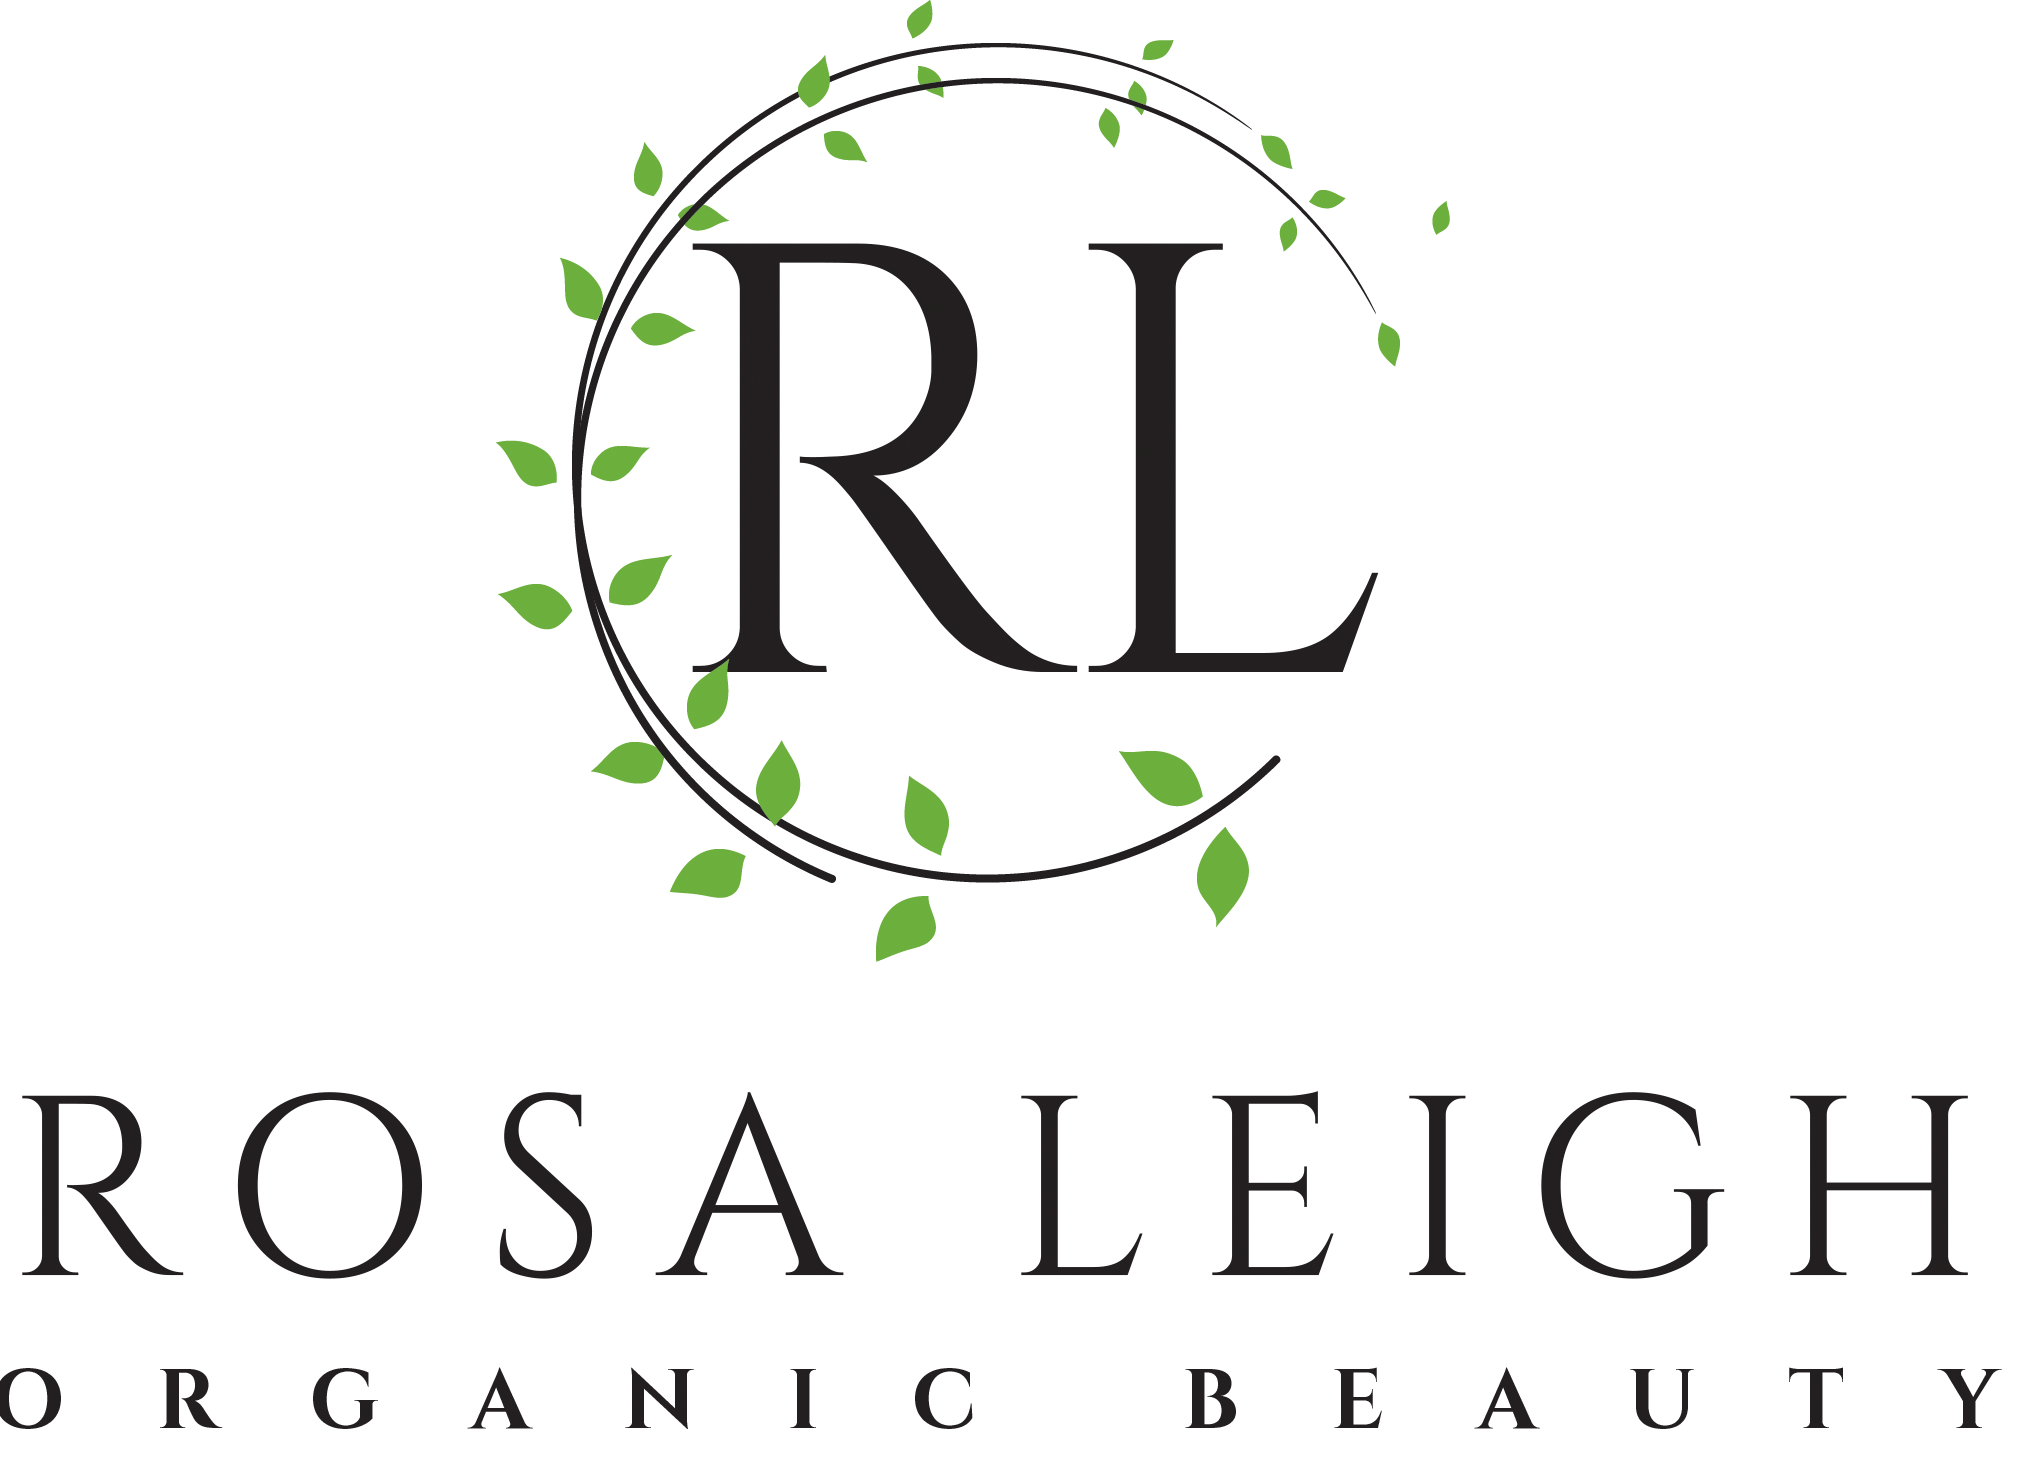 Rosa Leigh Organic Beauty